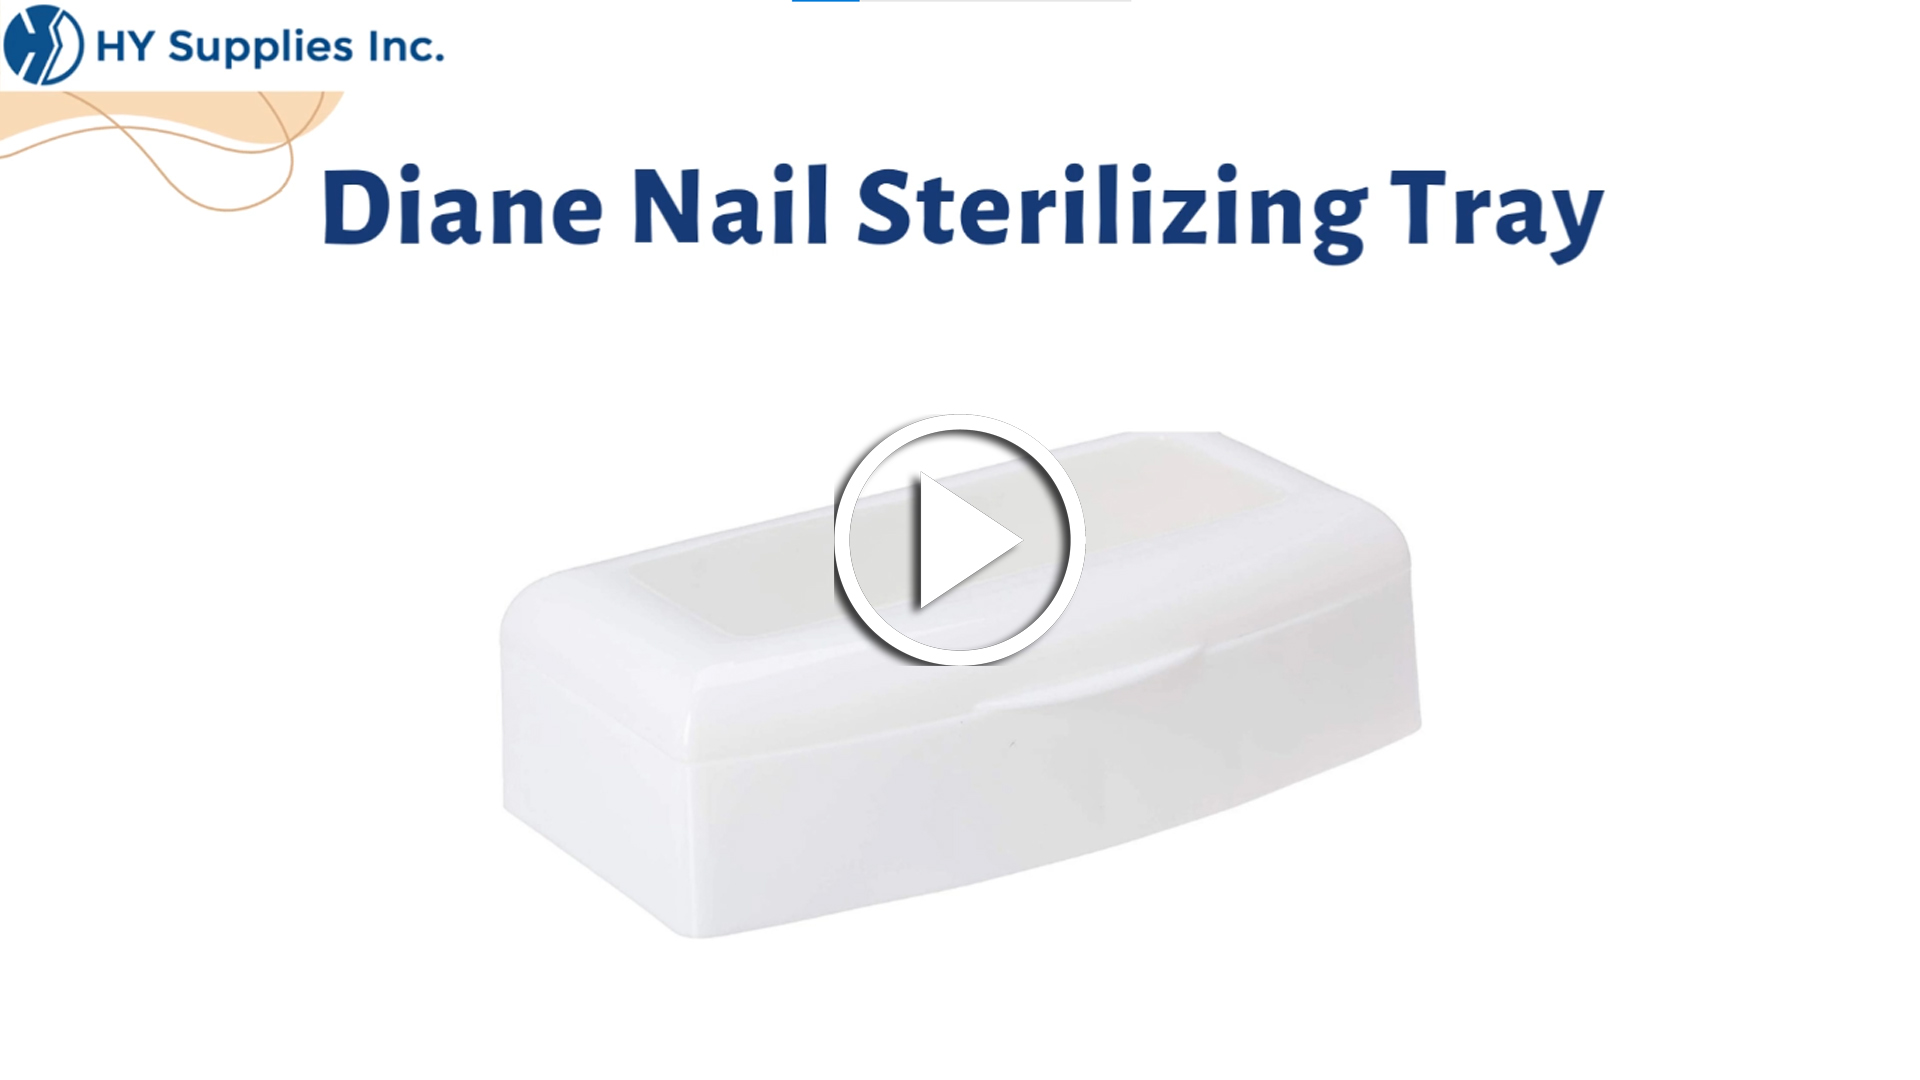 Diane Nail Sterilizing Tray